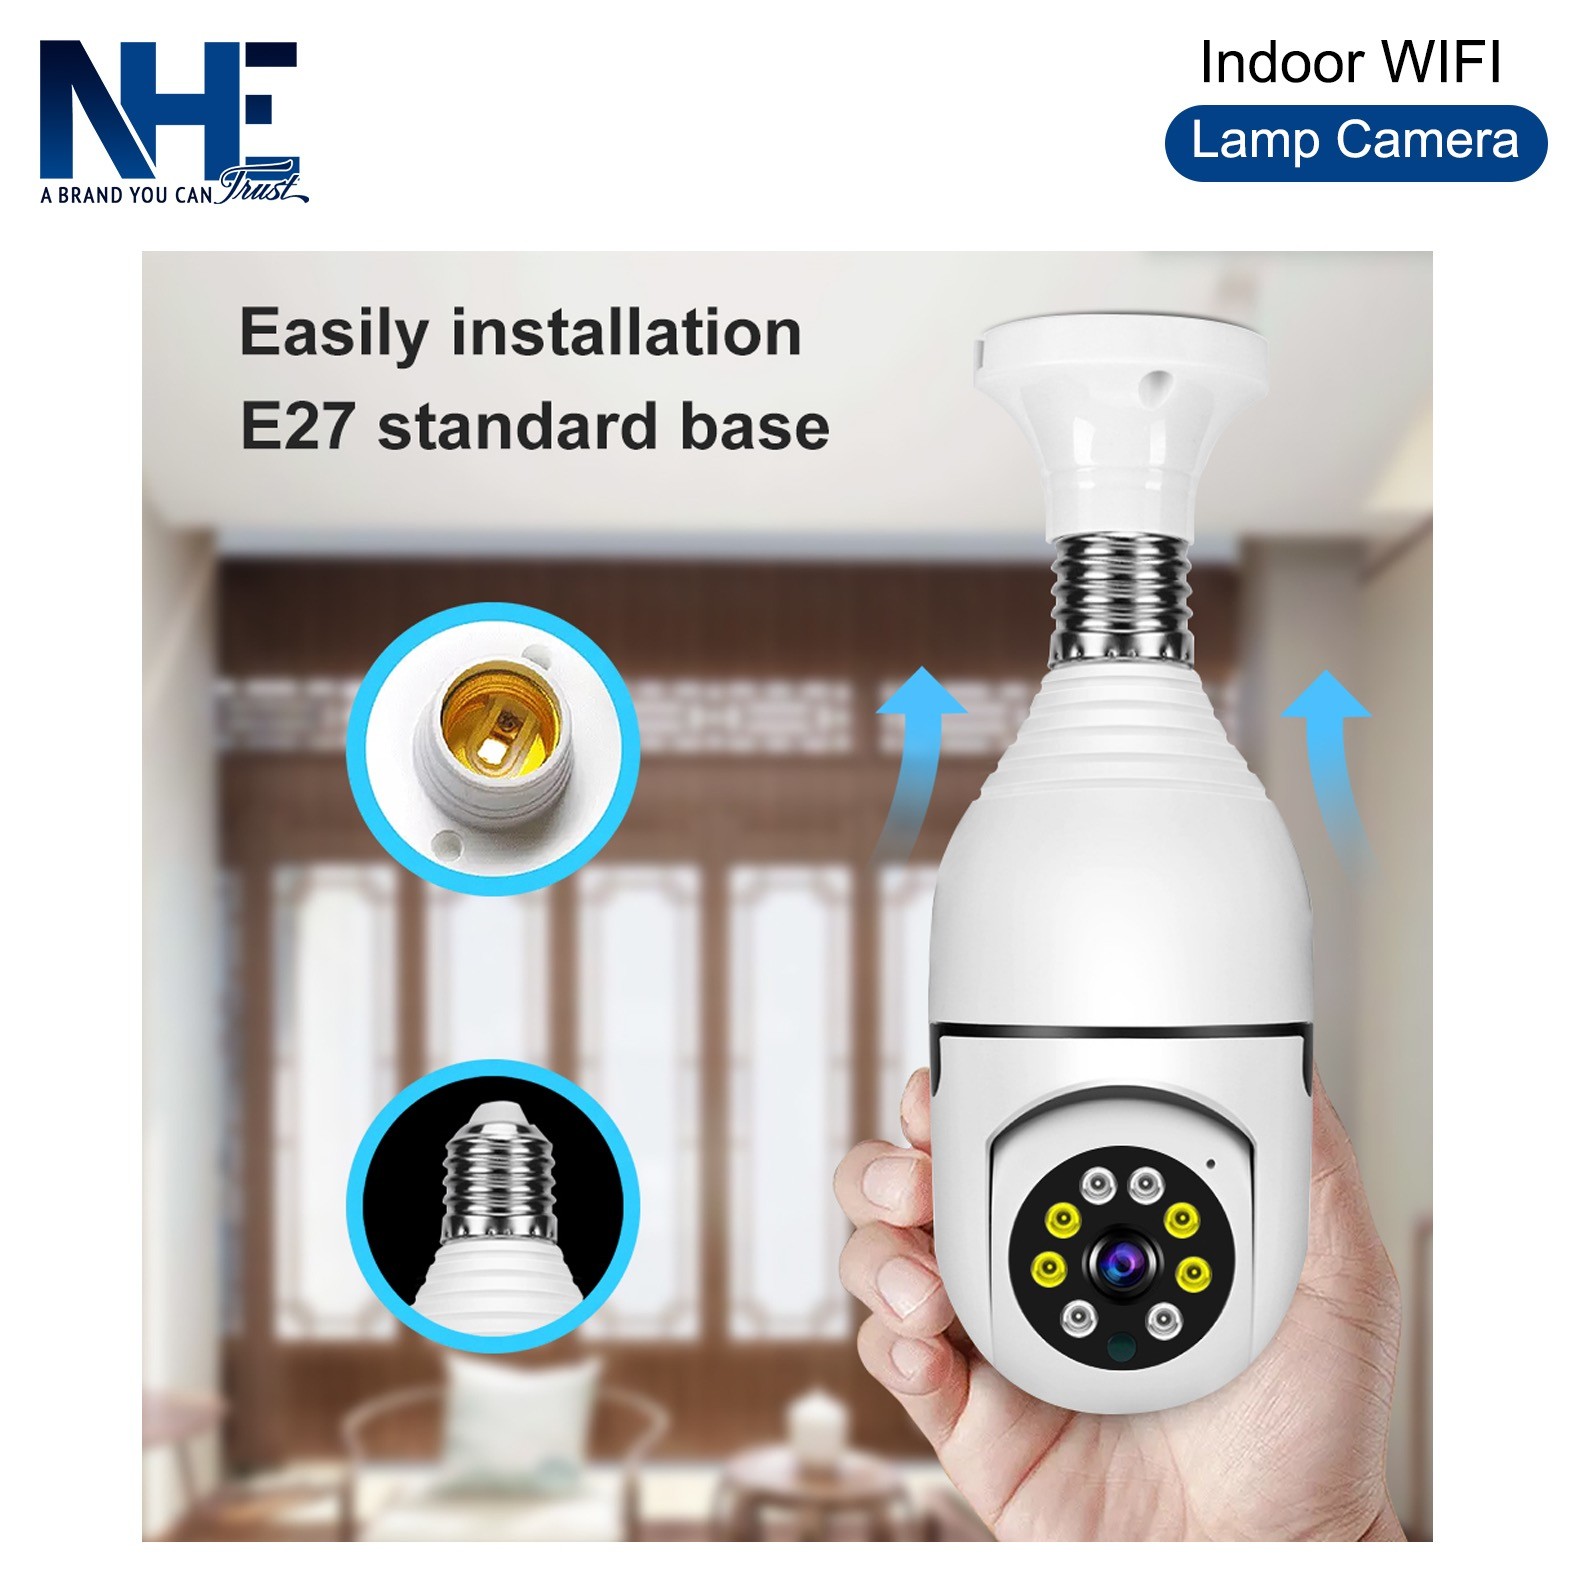 NHE Indoor WIFI Lamp Camera